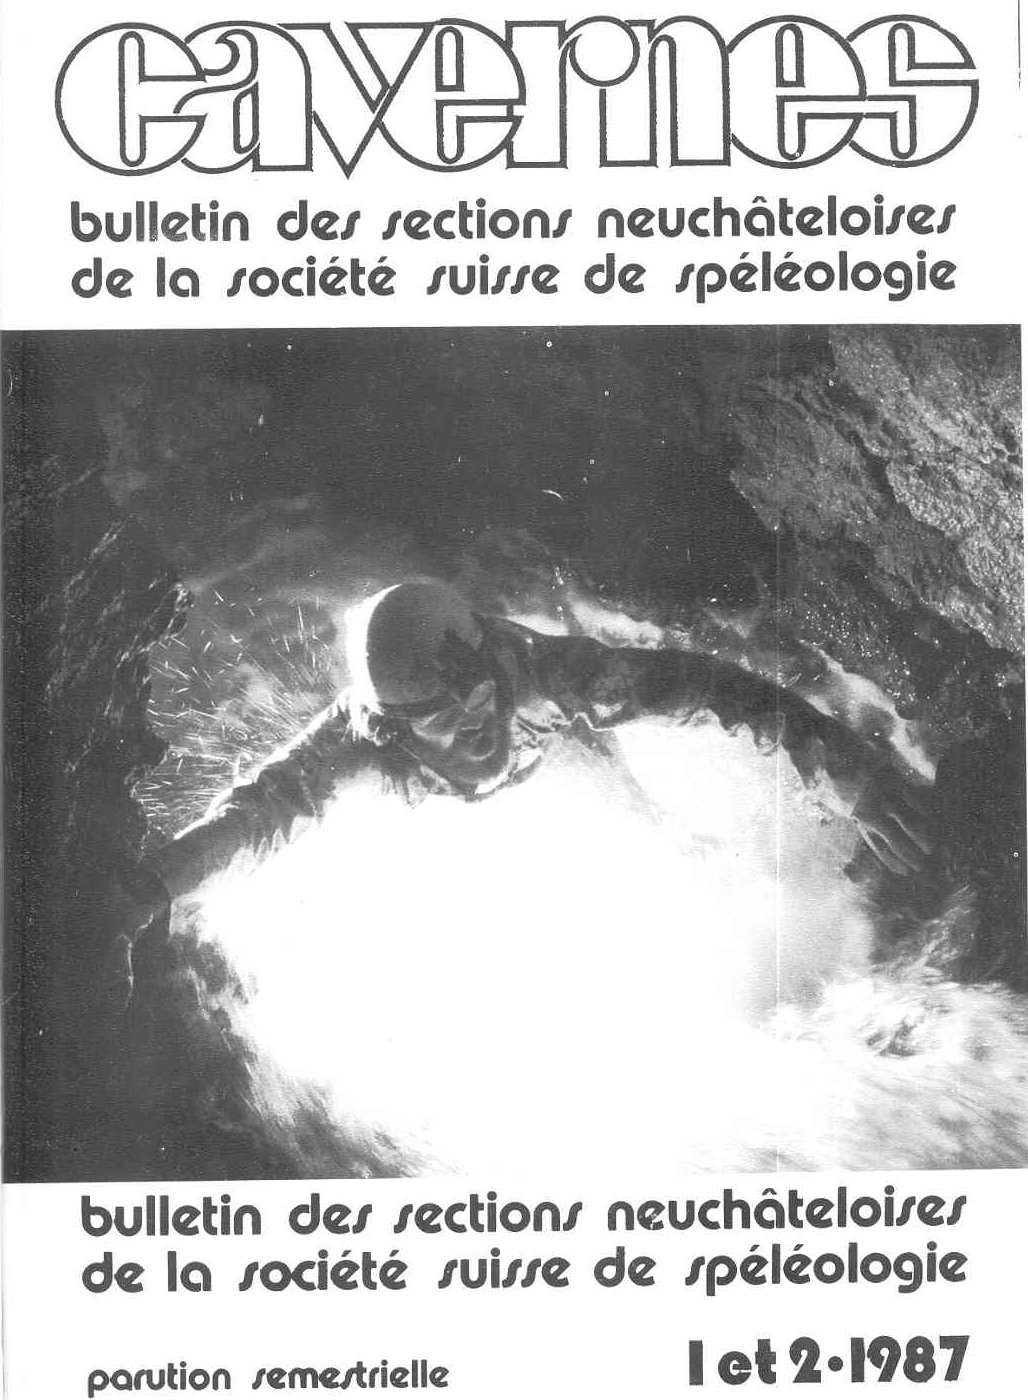 Cavernes/copertina anno 1987 n°1 e 2.jpg